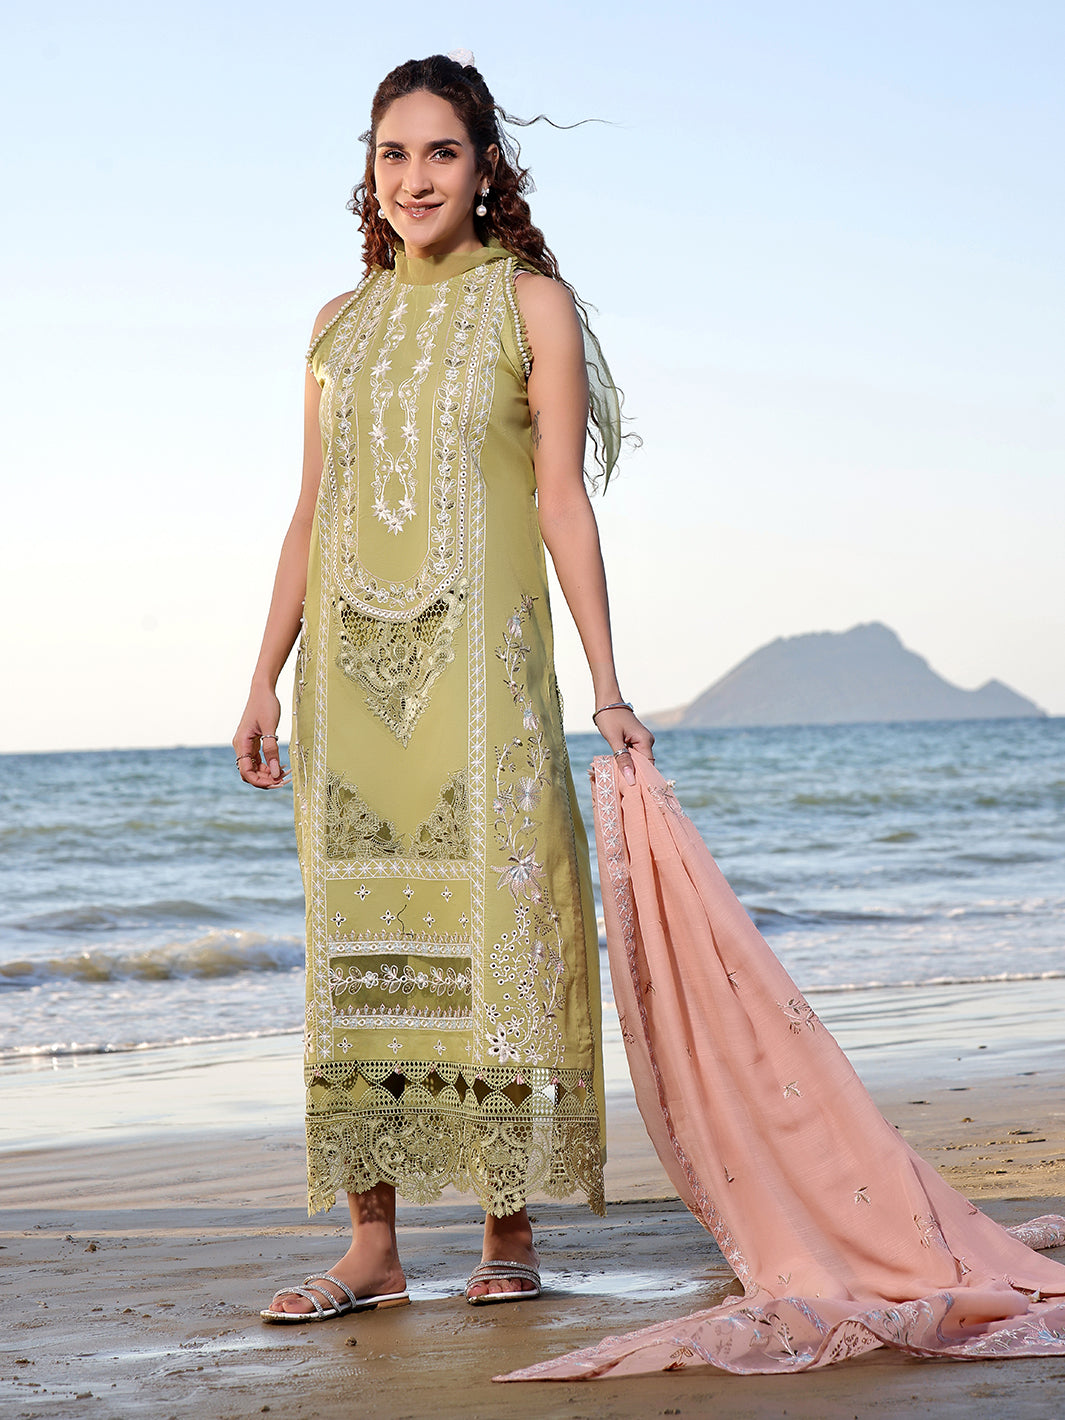 Izel | Saahil Signature Lawn 24 | MUZLIN - Khanumjan  Pakistani Clothes and Designer Dresses in UK, USA 